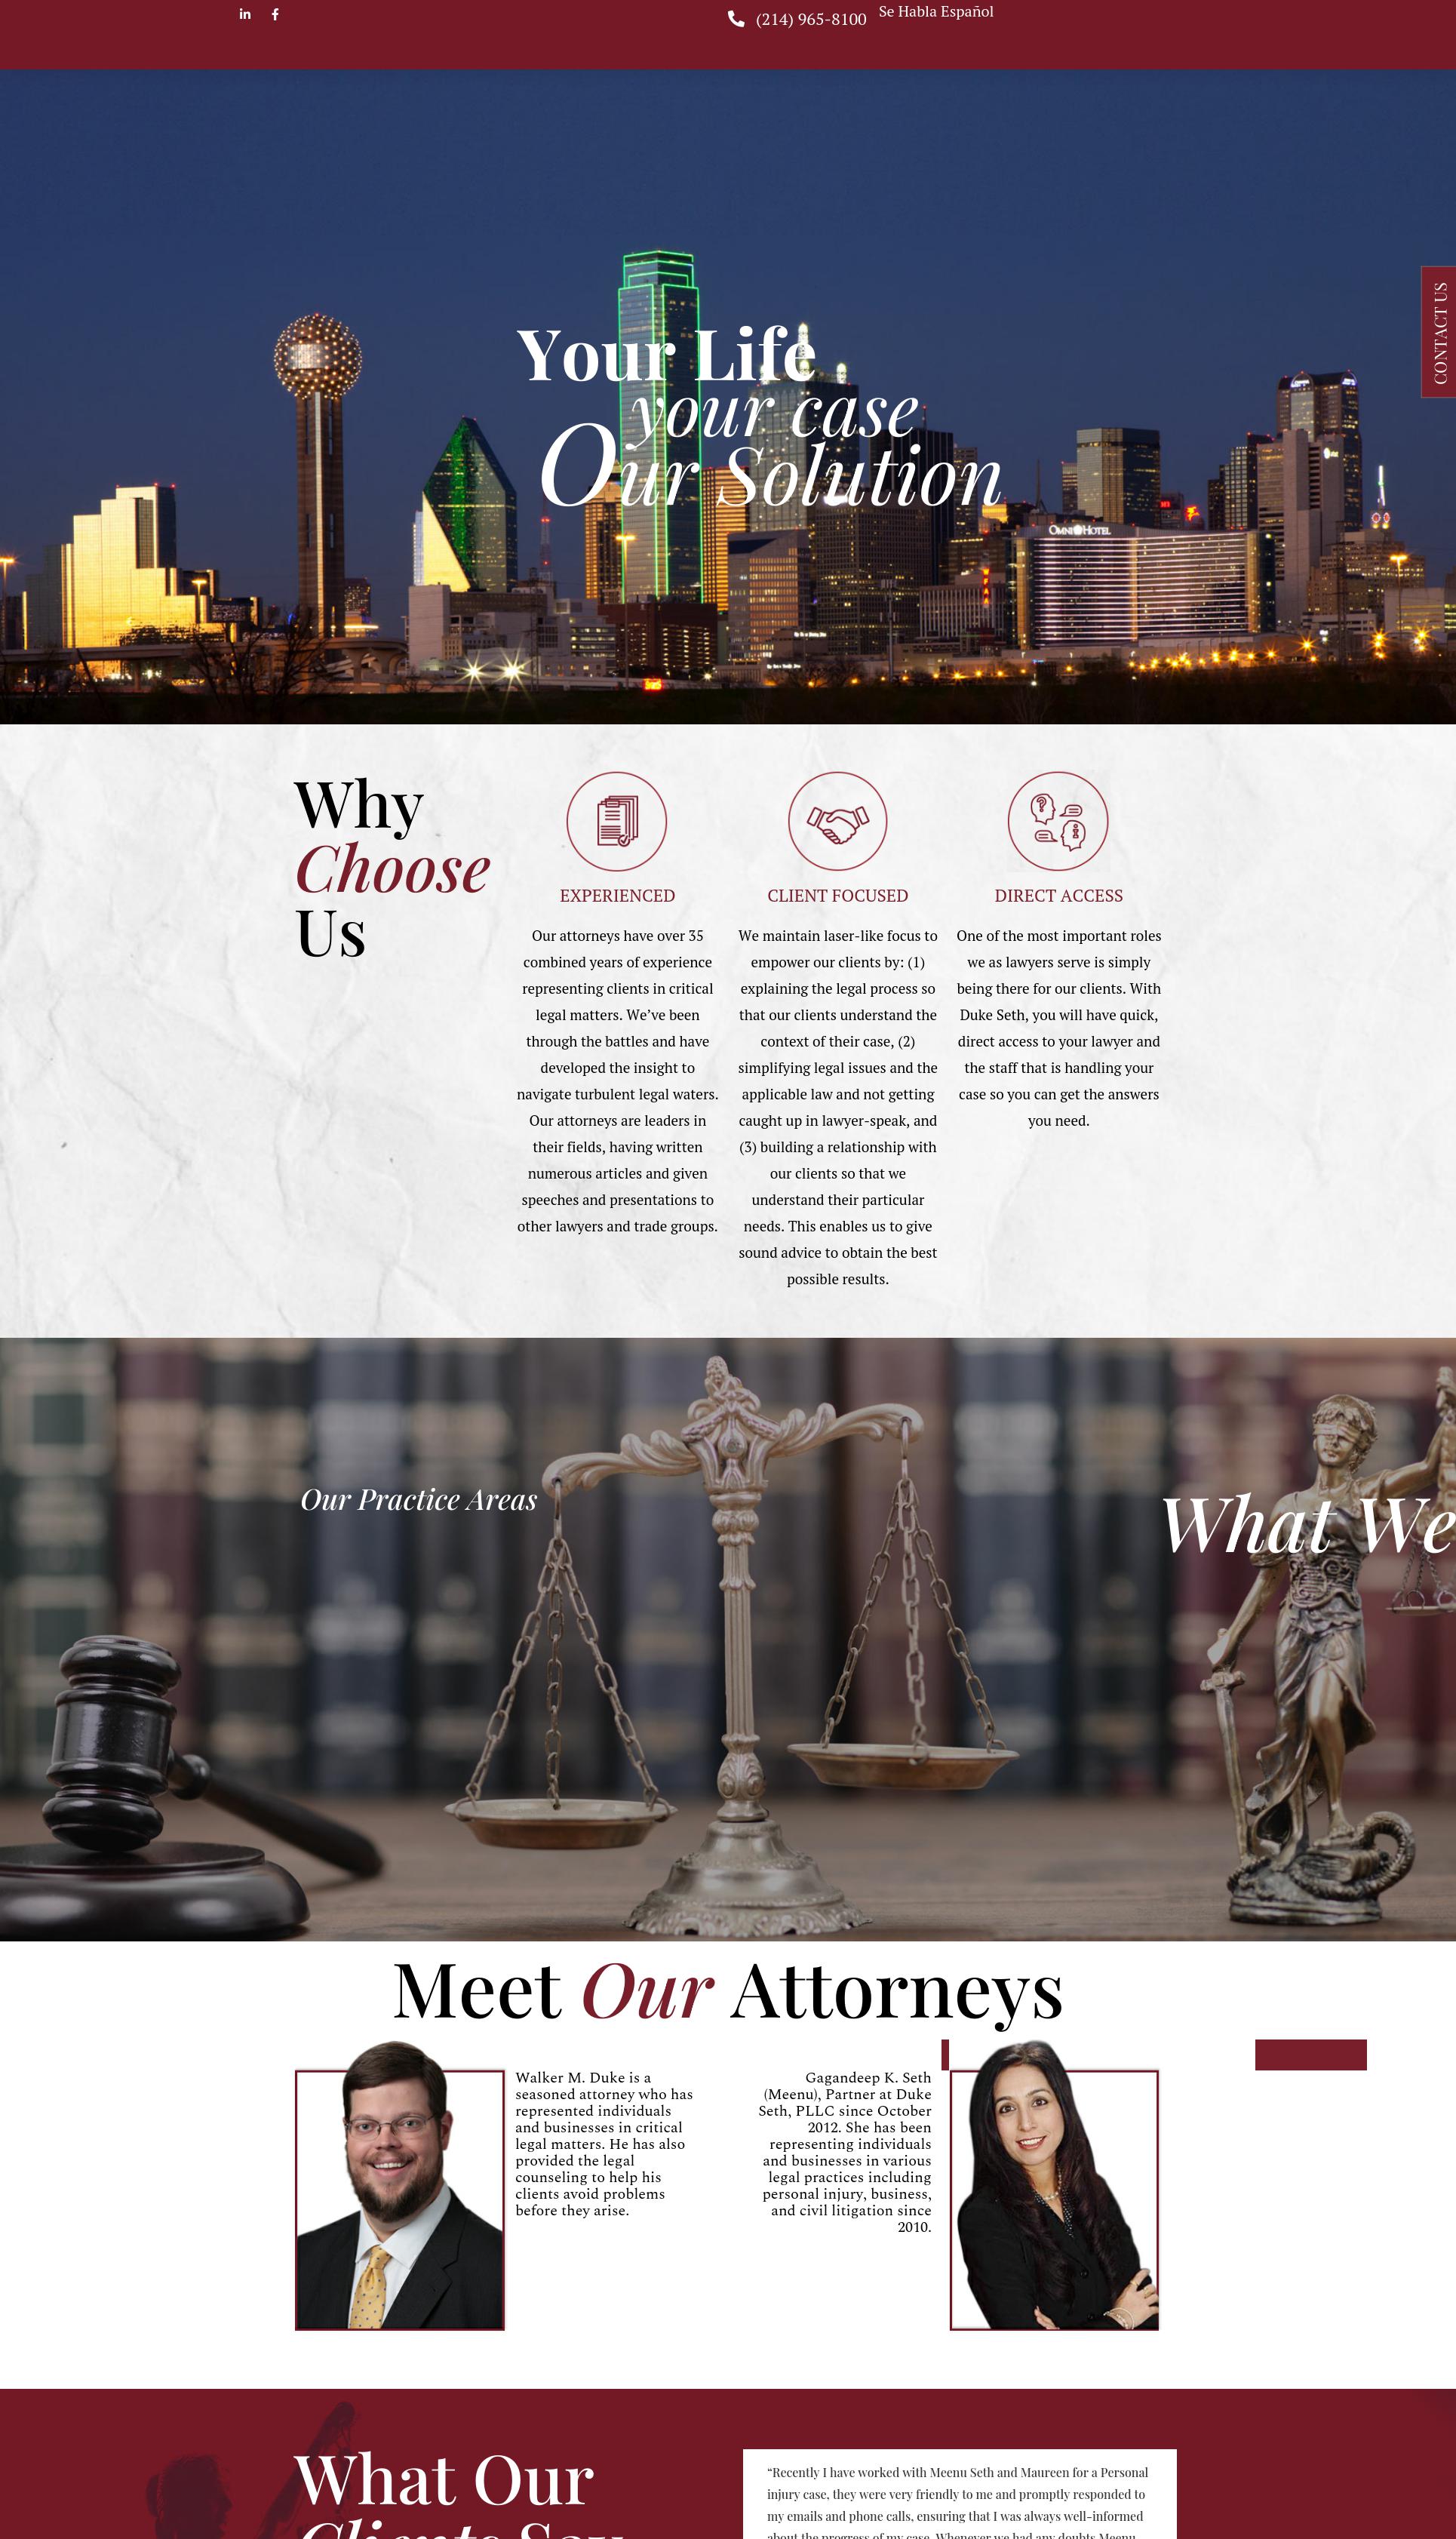 Duke Seth, PLLC - Dallas TX Lawyers